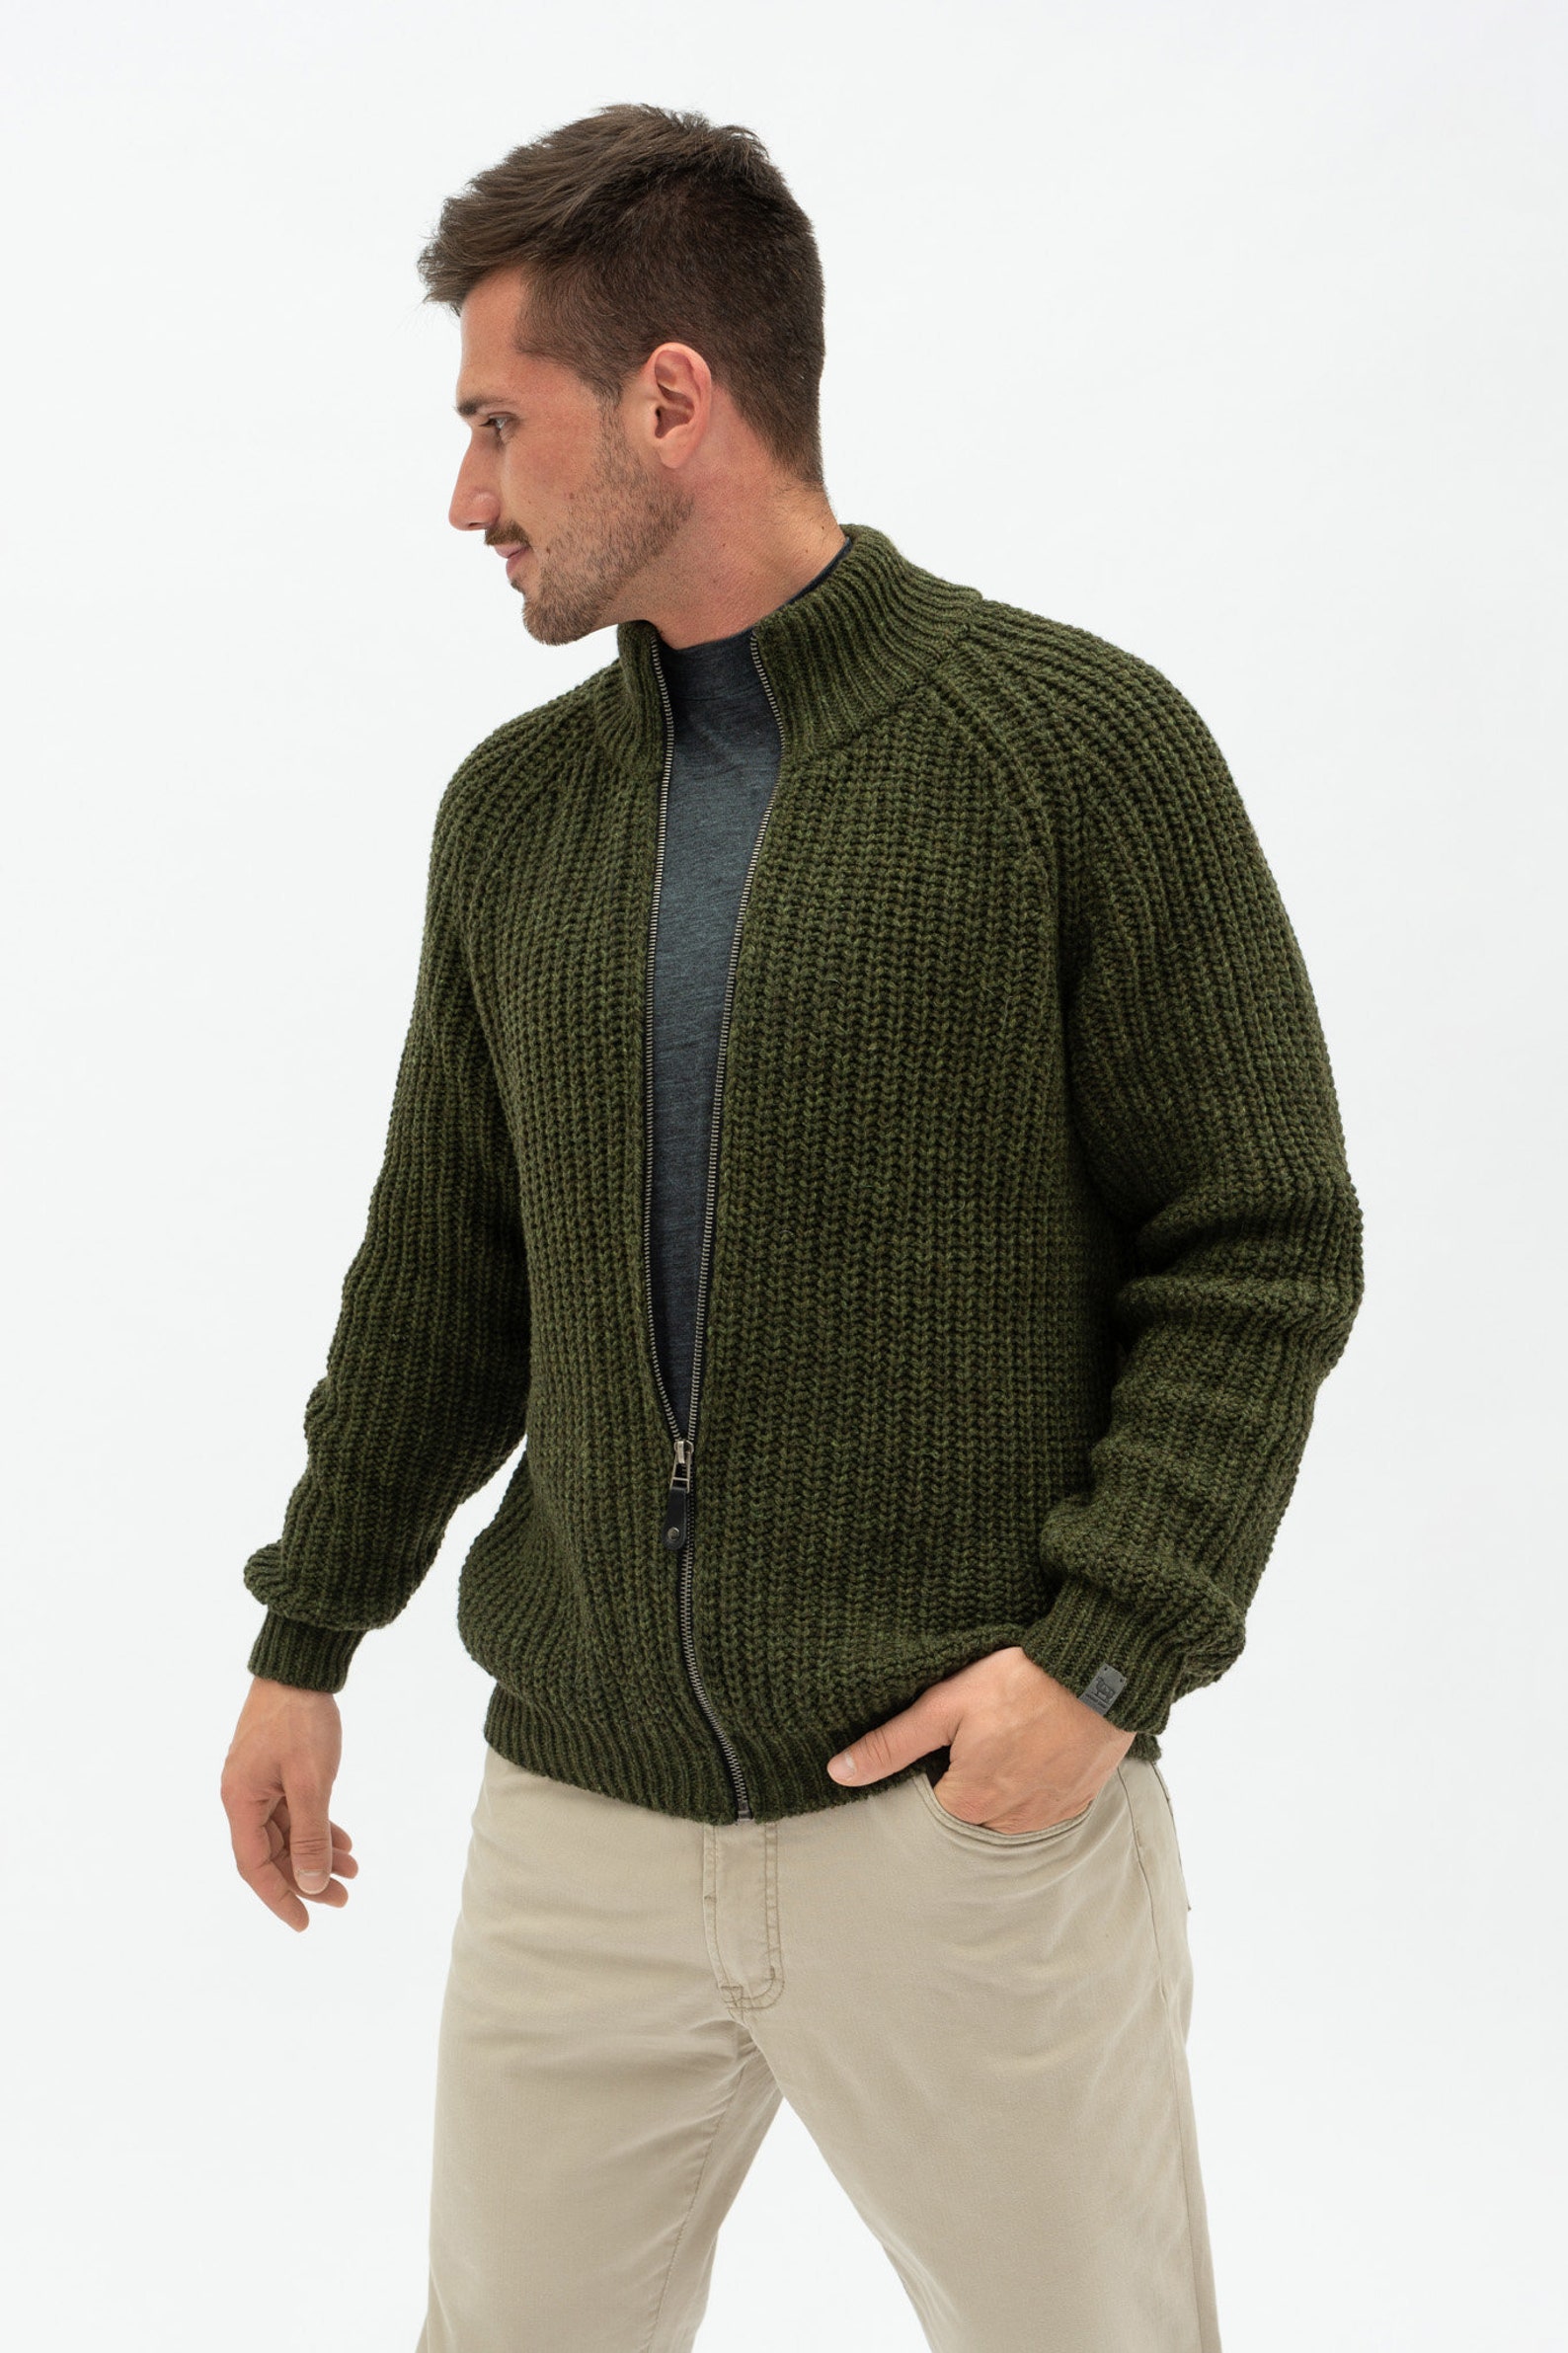 Warm Merino Wool Jumper Men's Sweater With Zip | Etsy